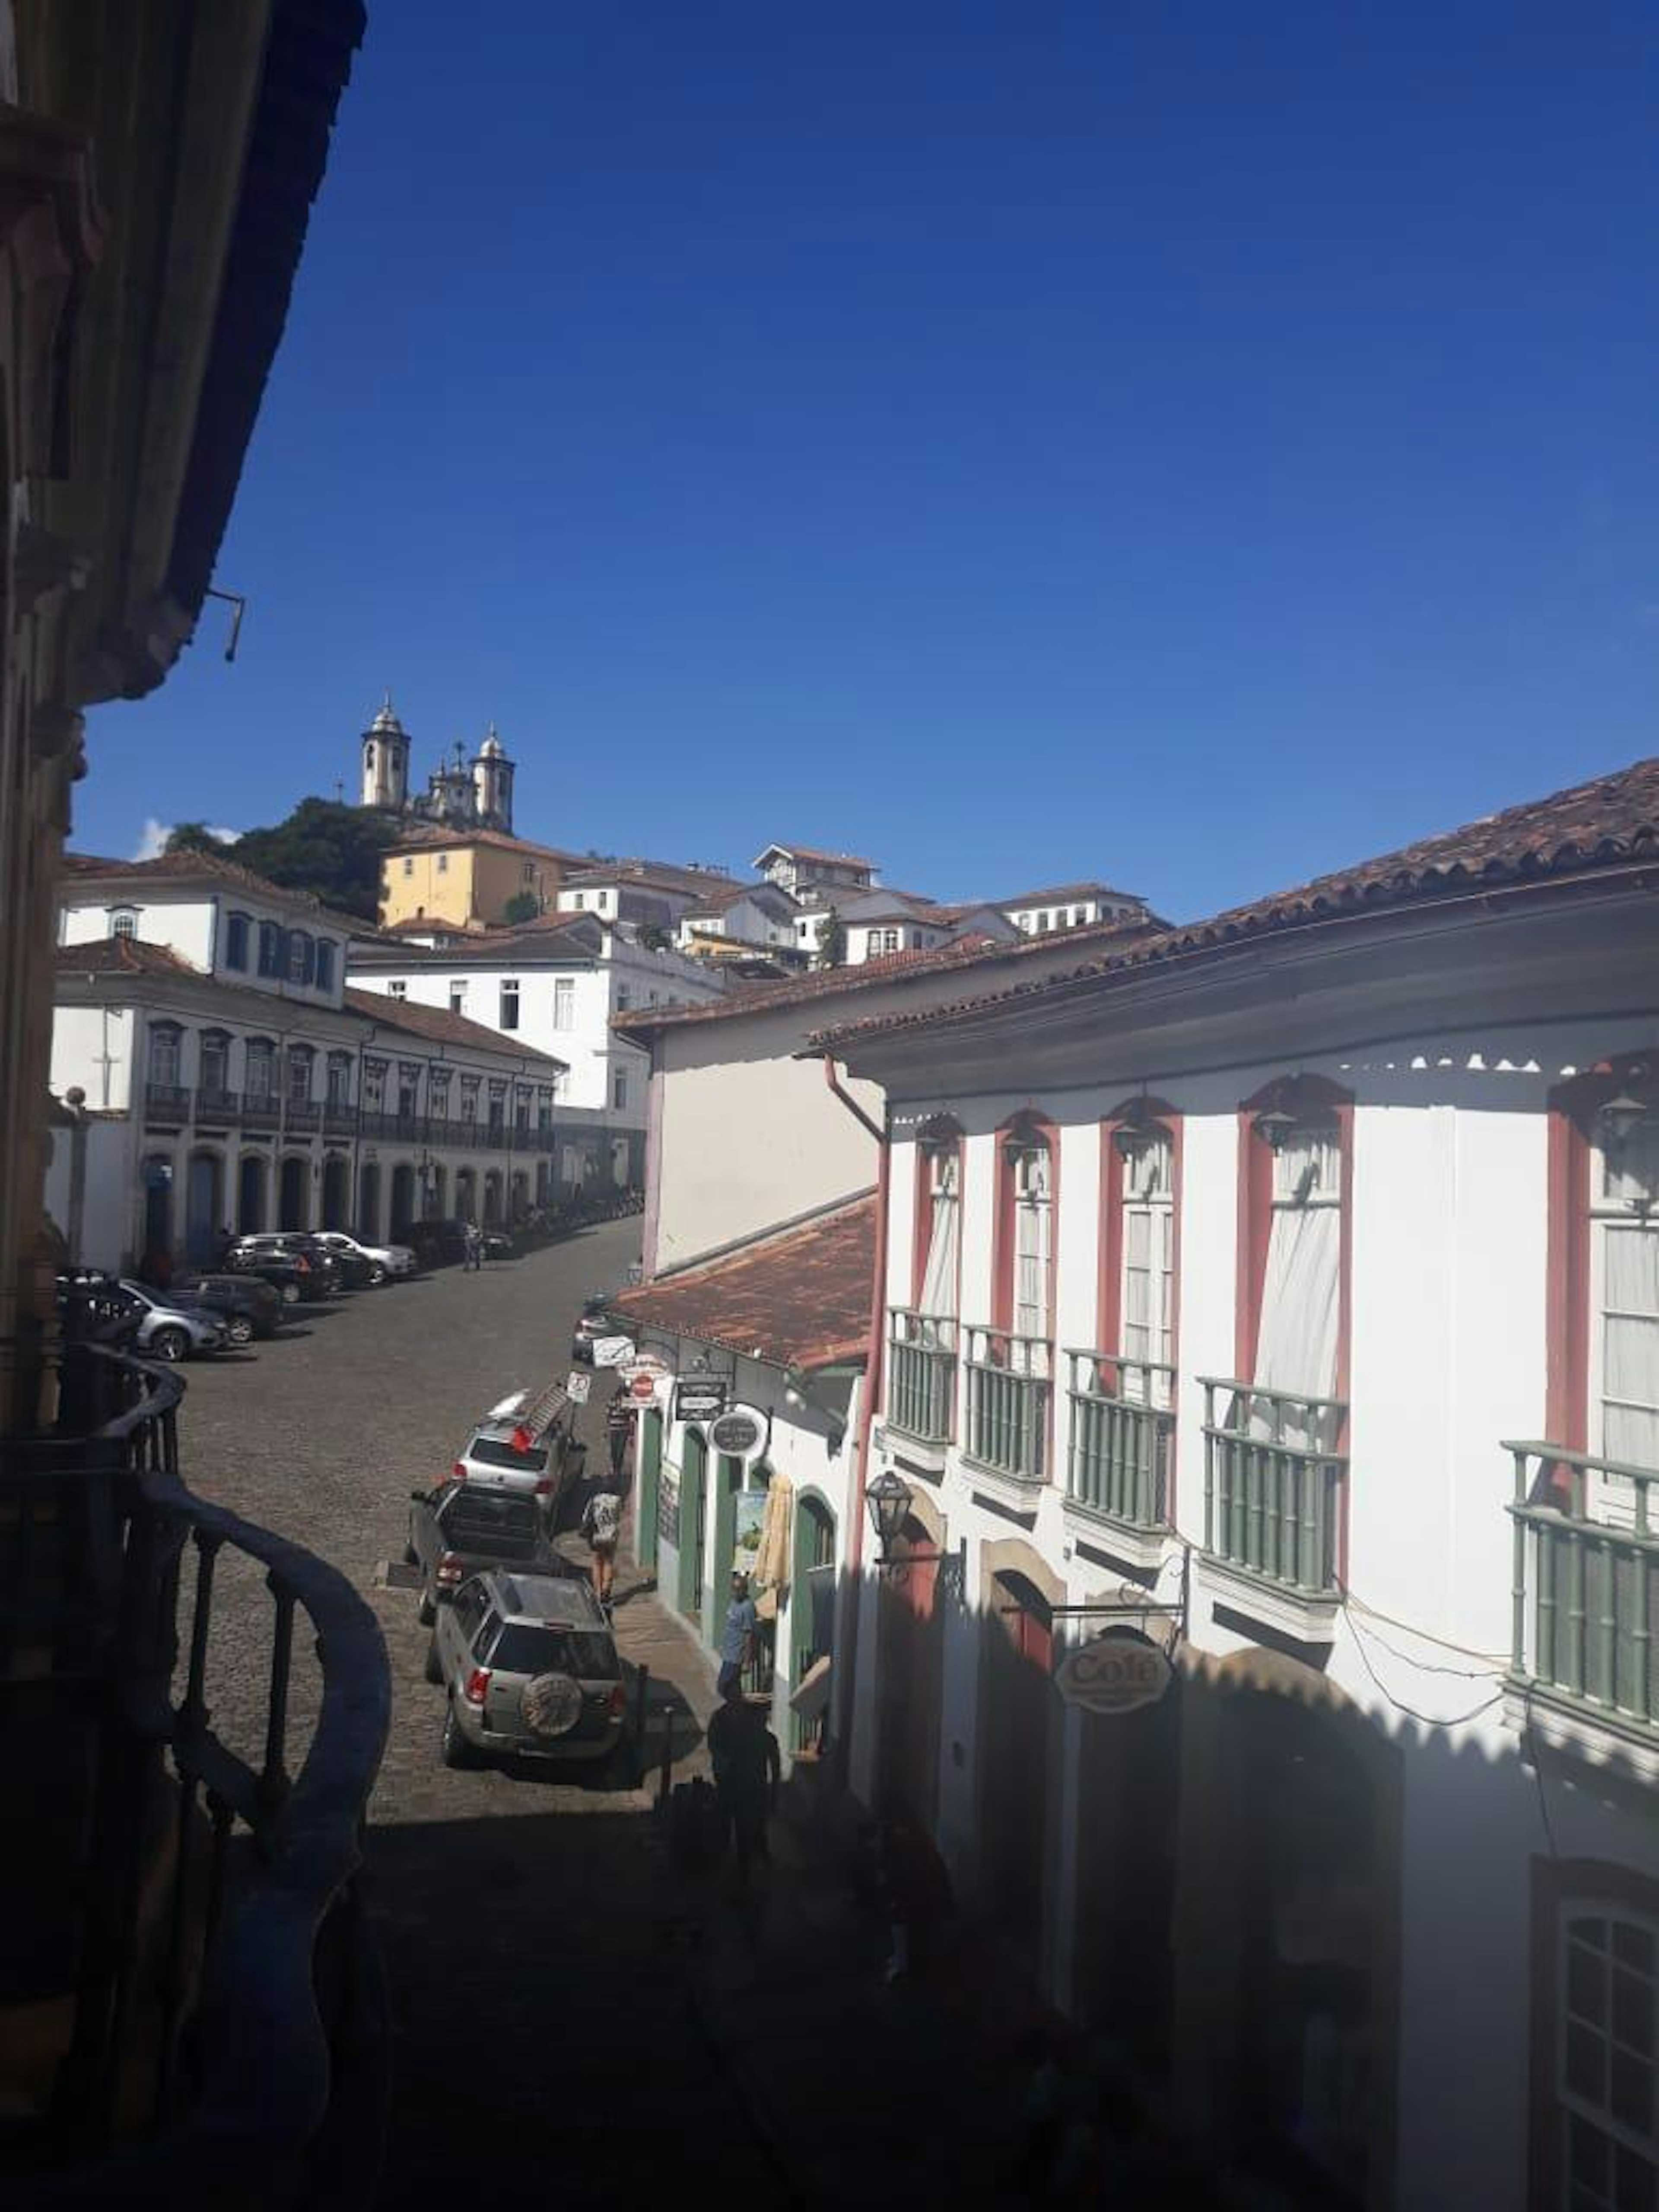 Picture taken in Ouro Preto, Minas Gerais